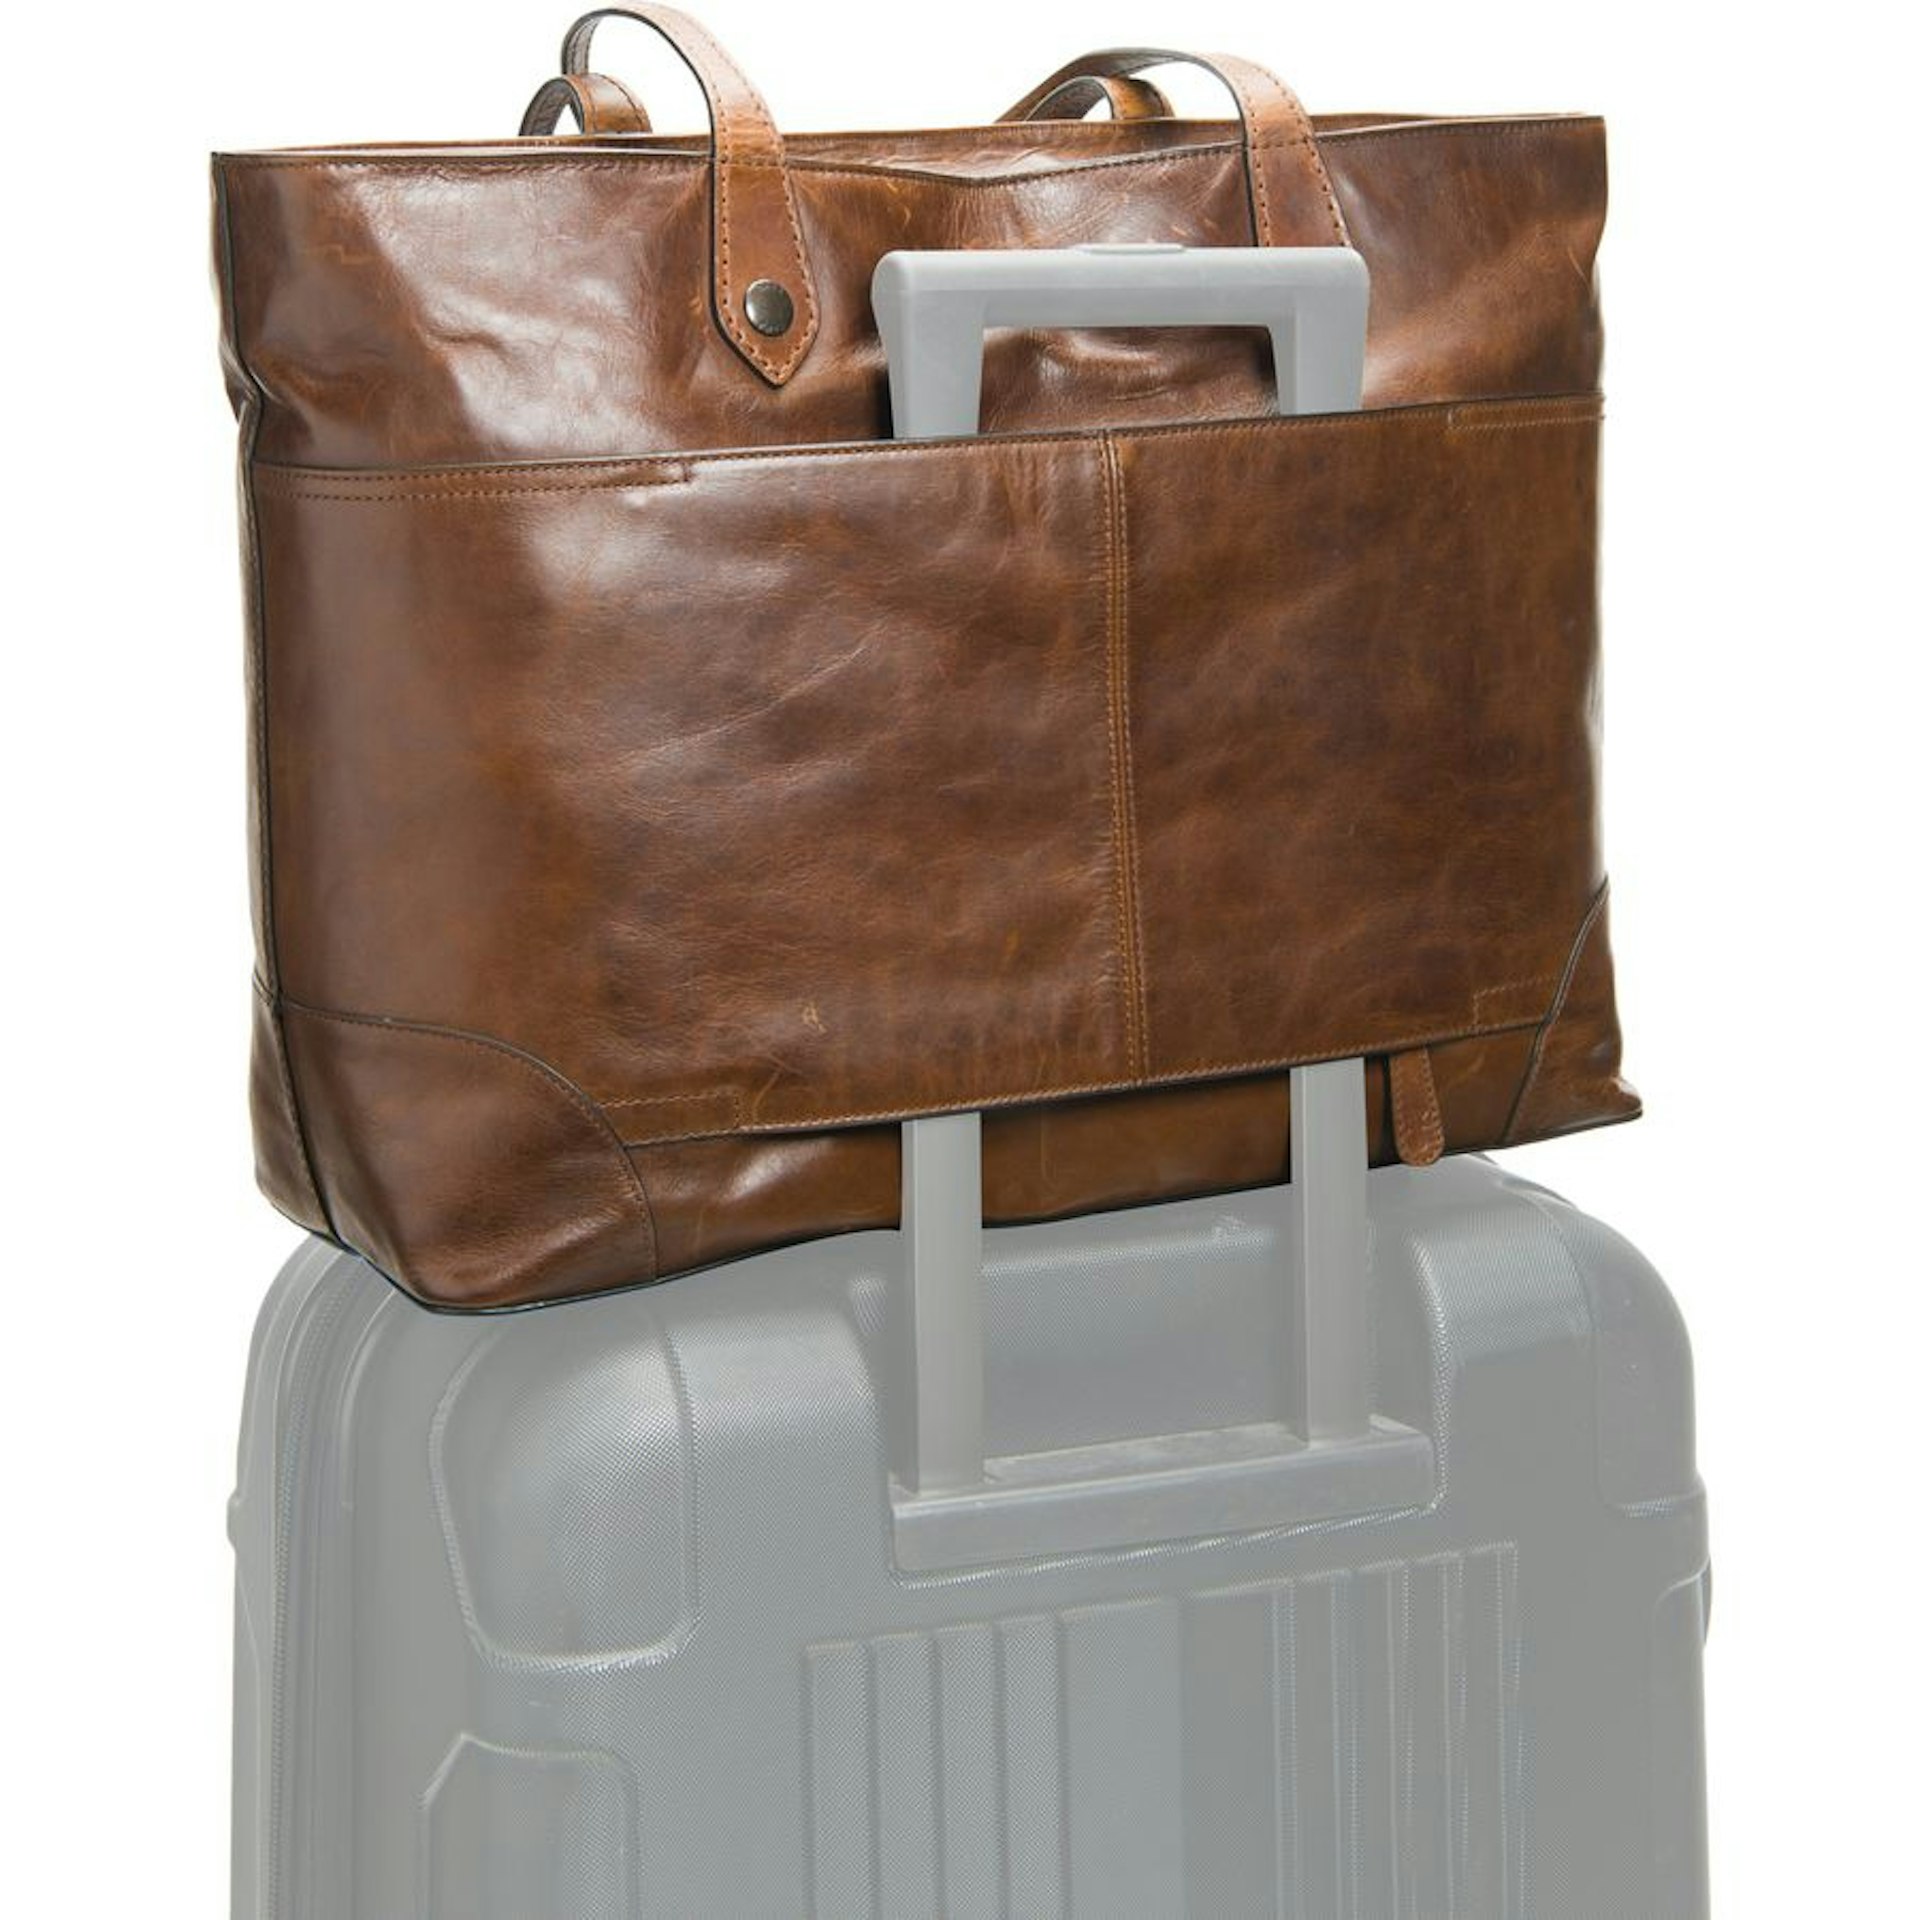 Frye's Melissa bag has plenty of details for travelers